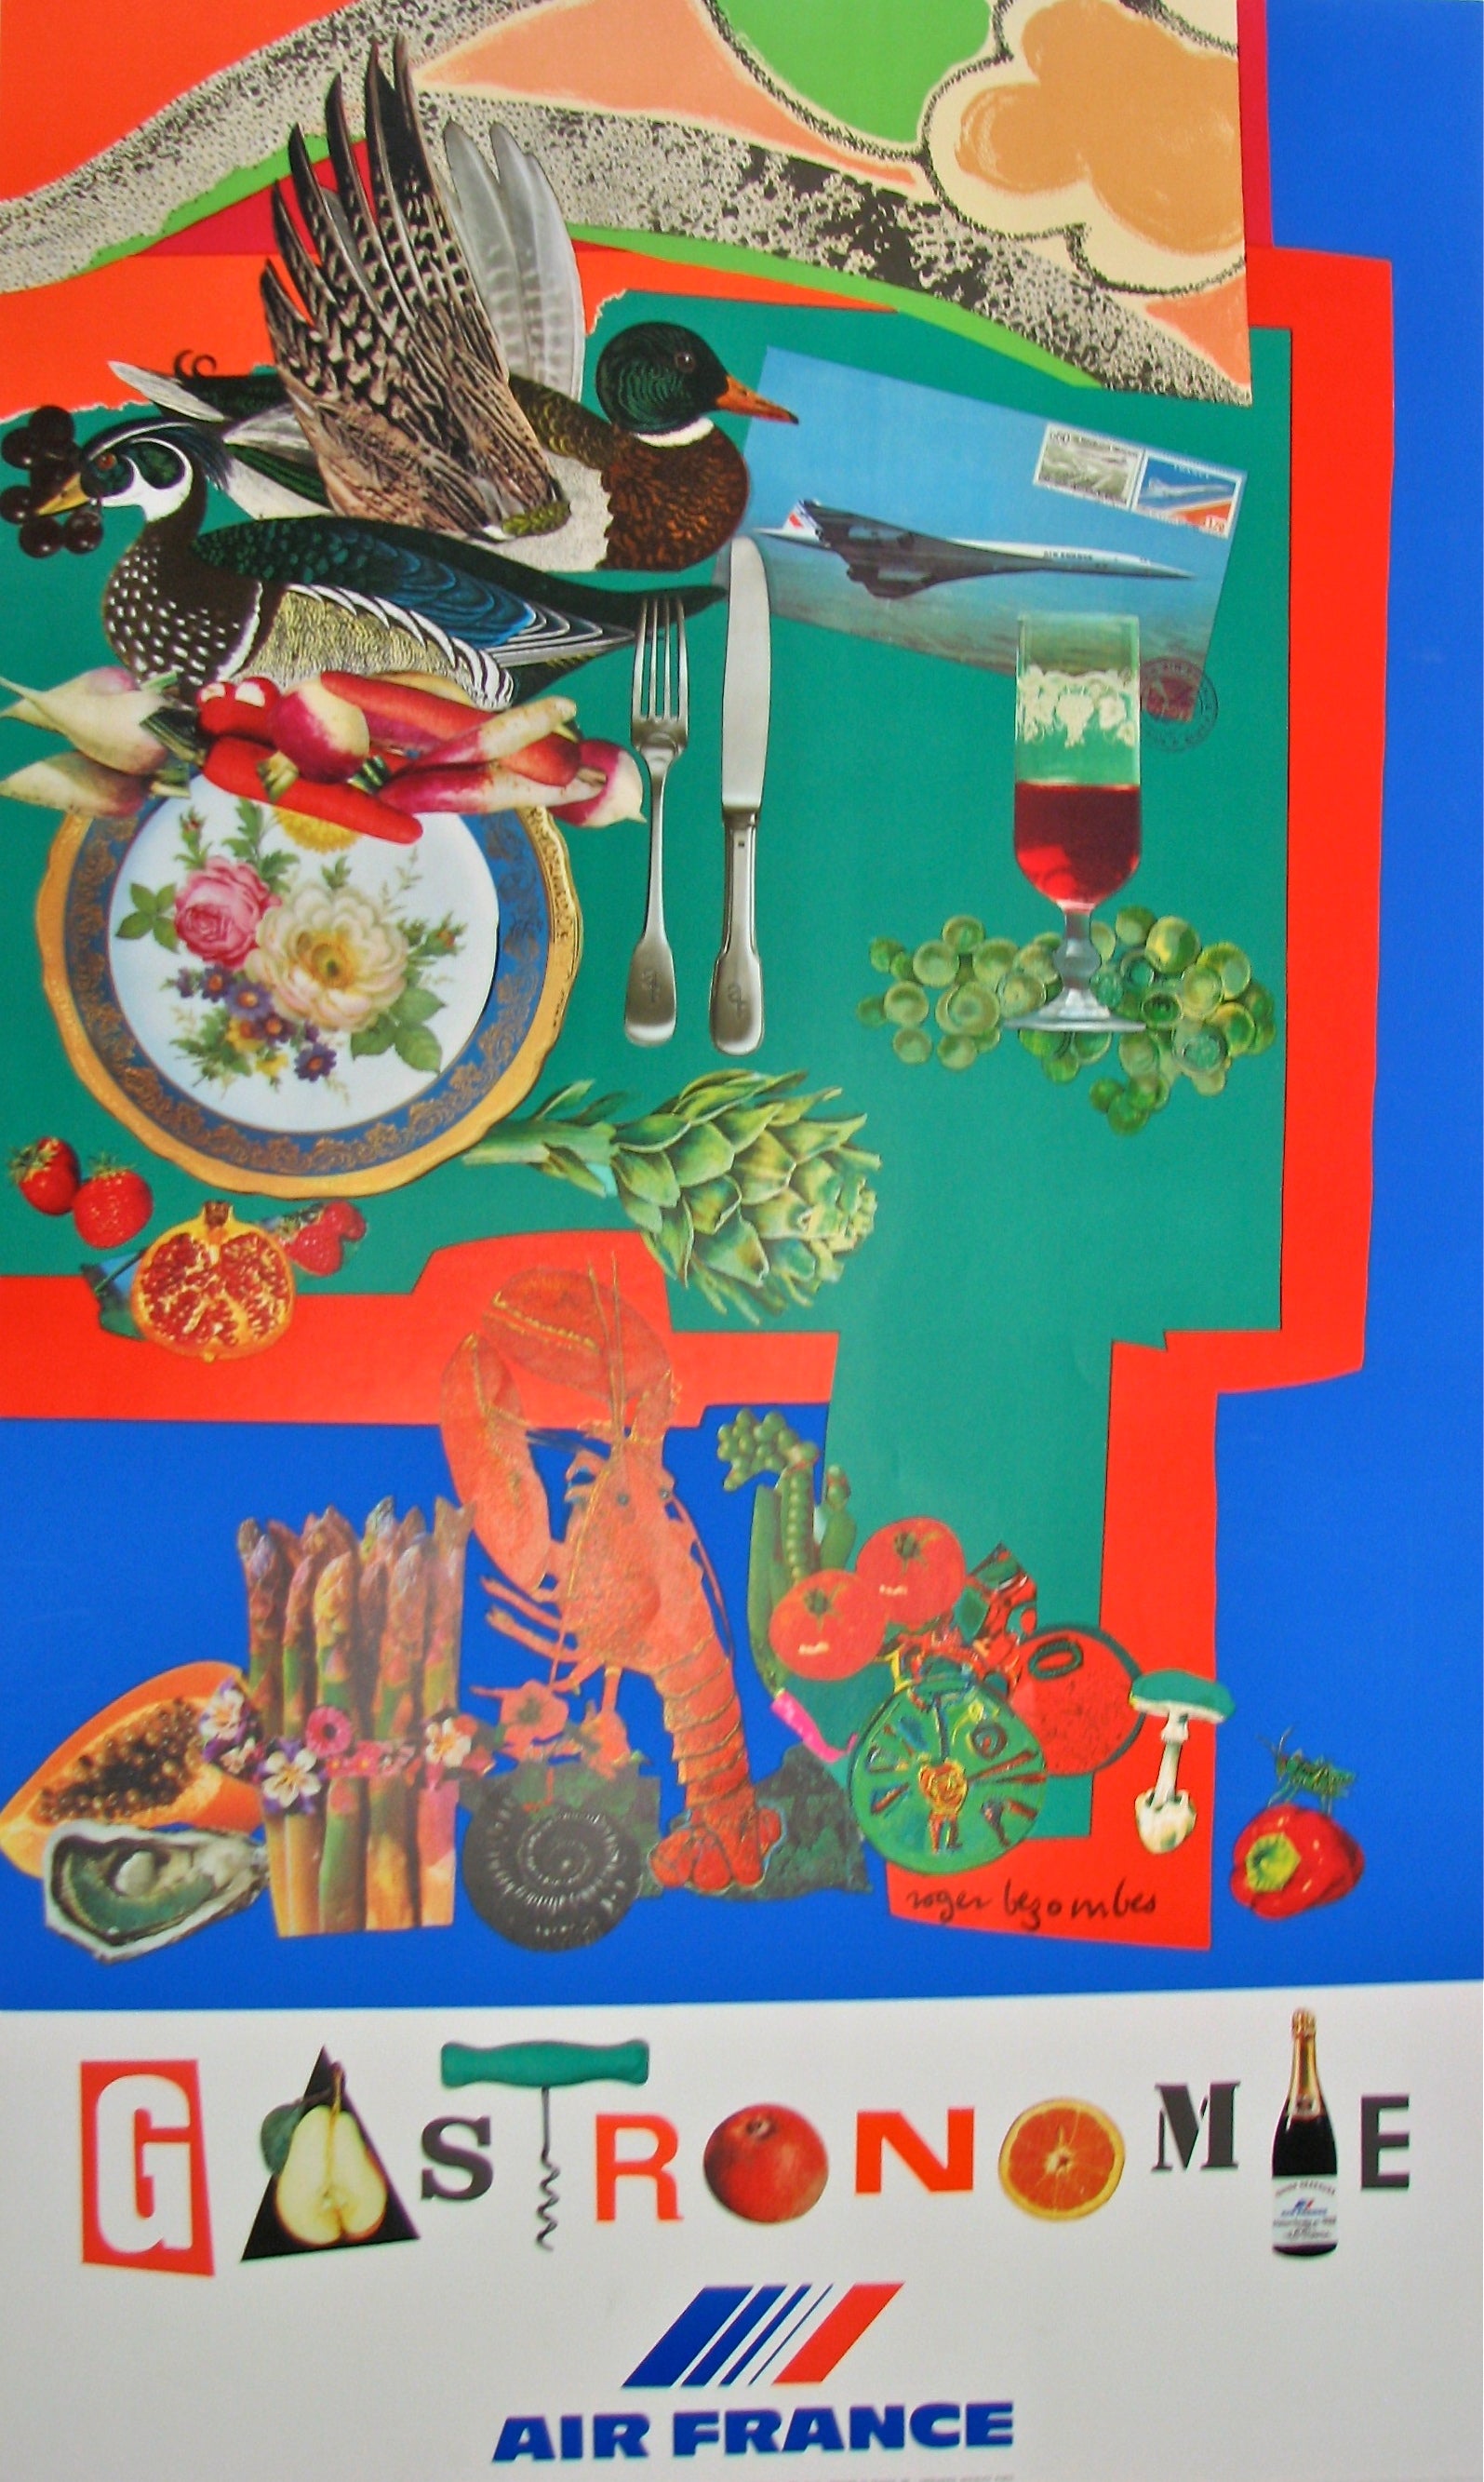 Air France, Gastronomie by Roger Bezombes, 1981 - Mourlot Editions - Fine_Art - Poster - Lithograph - Wall Art - Vintage - Prints - Original